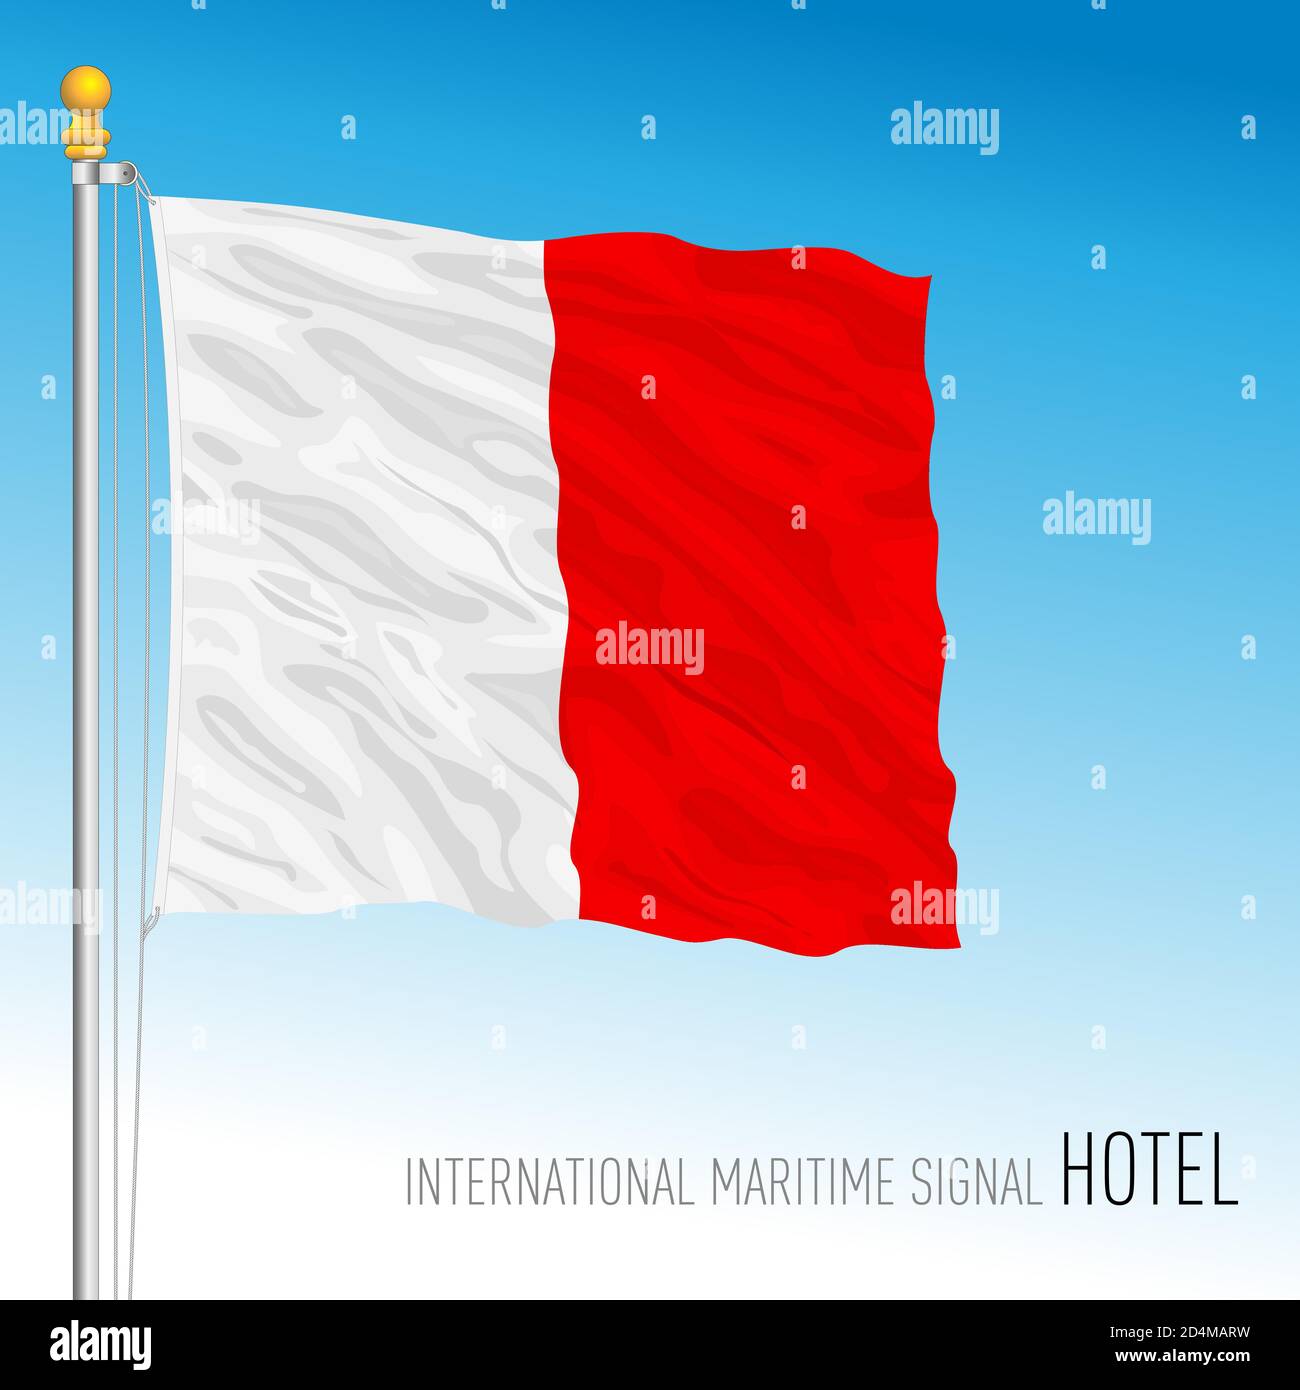 Hotelflagge, internationales maritimes Signal, Vektorgrafik Stock Vektor